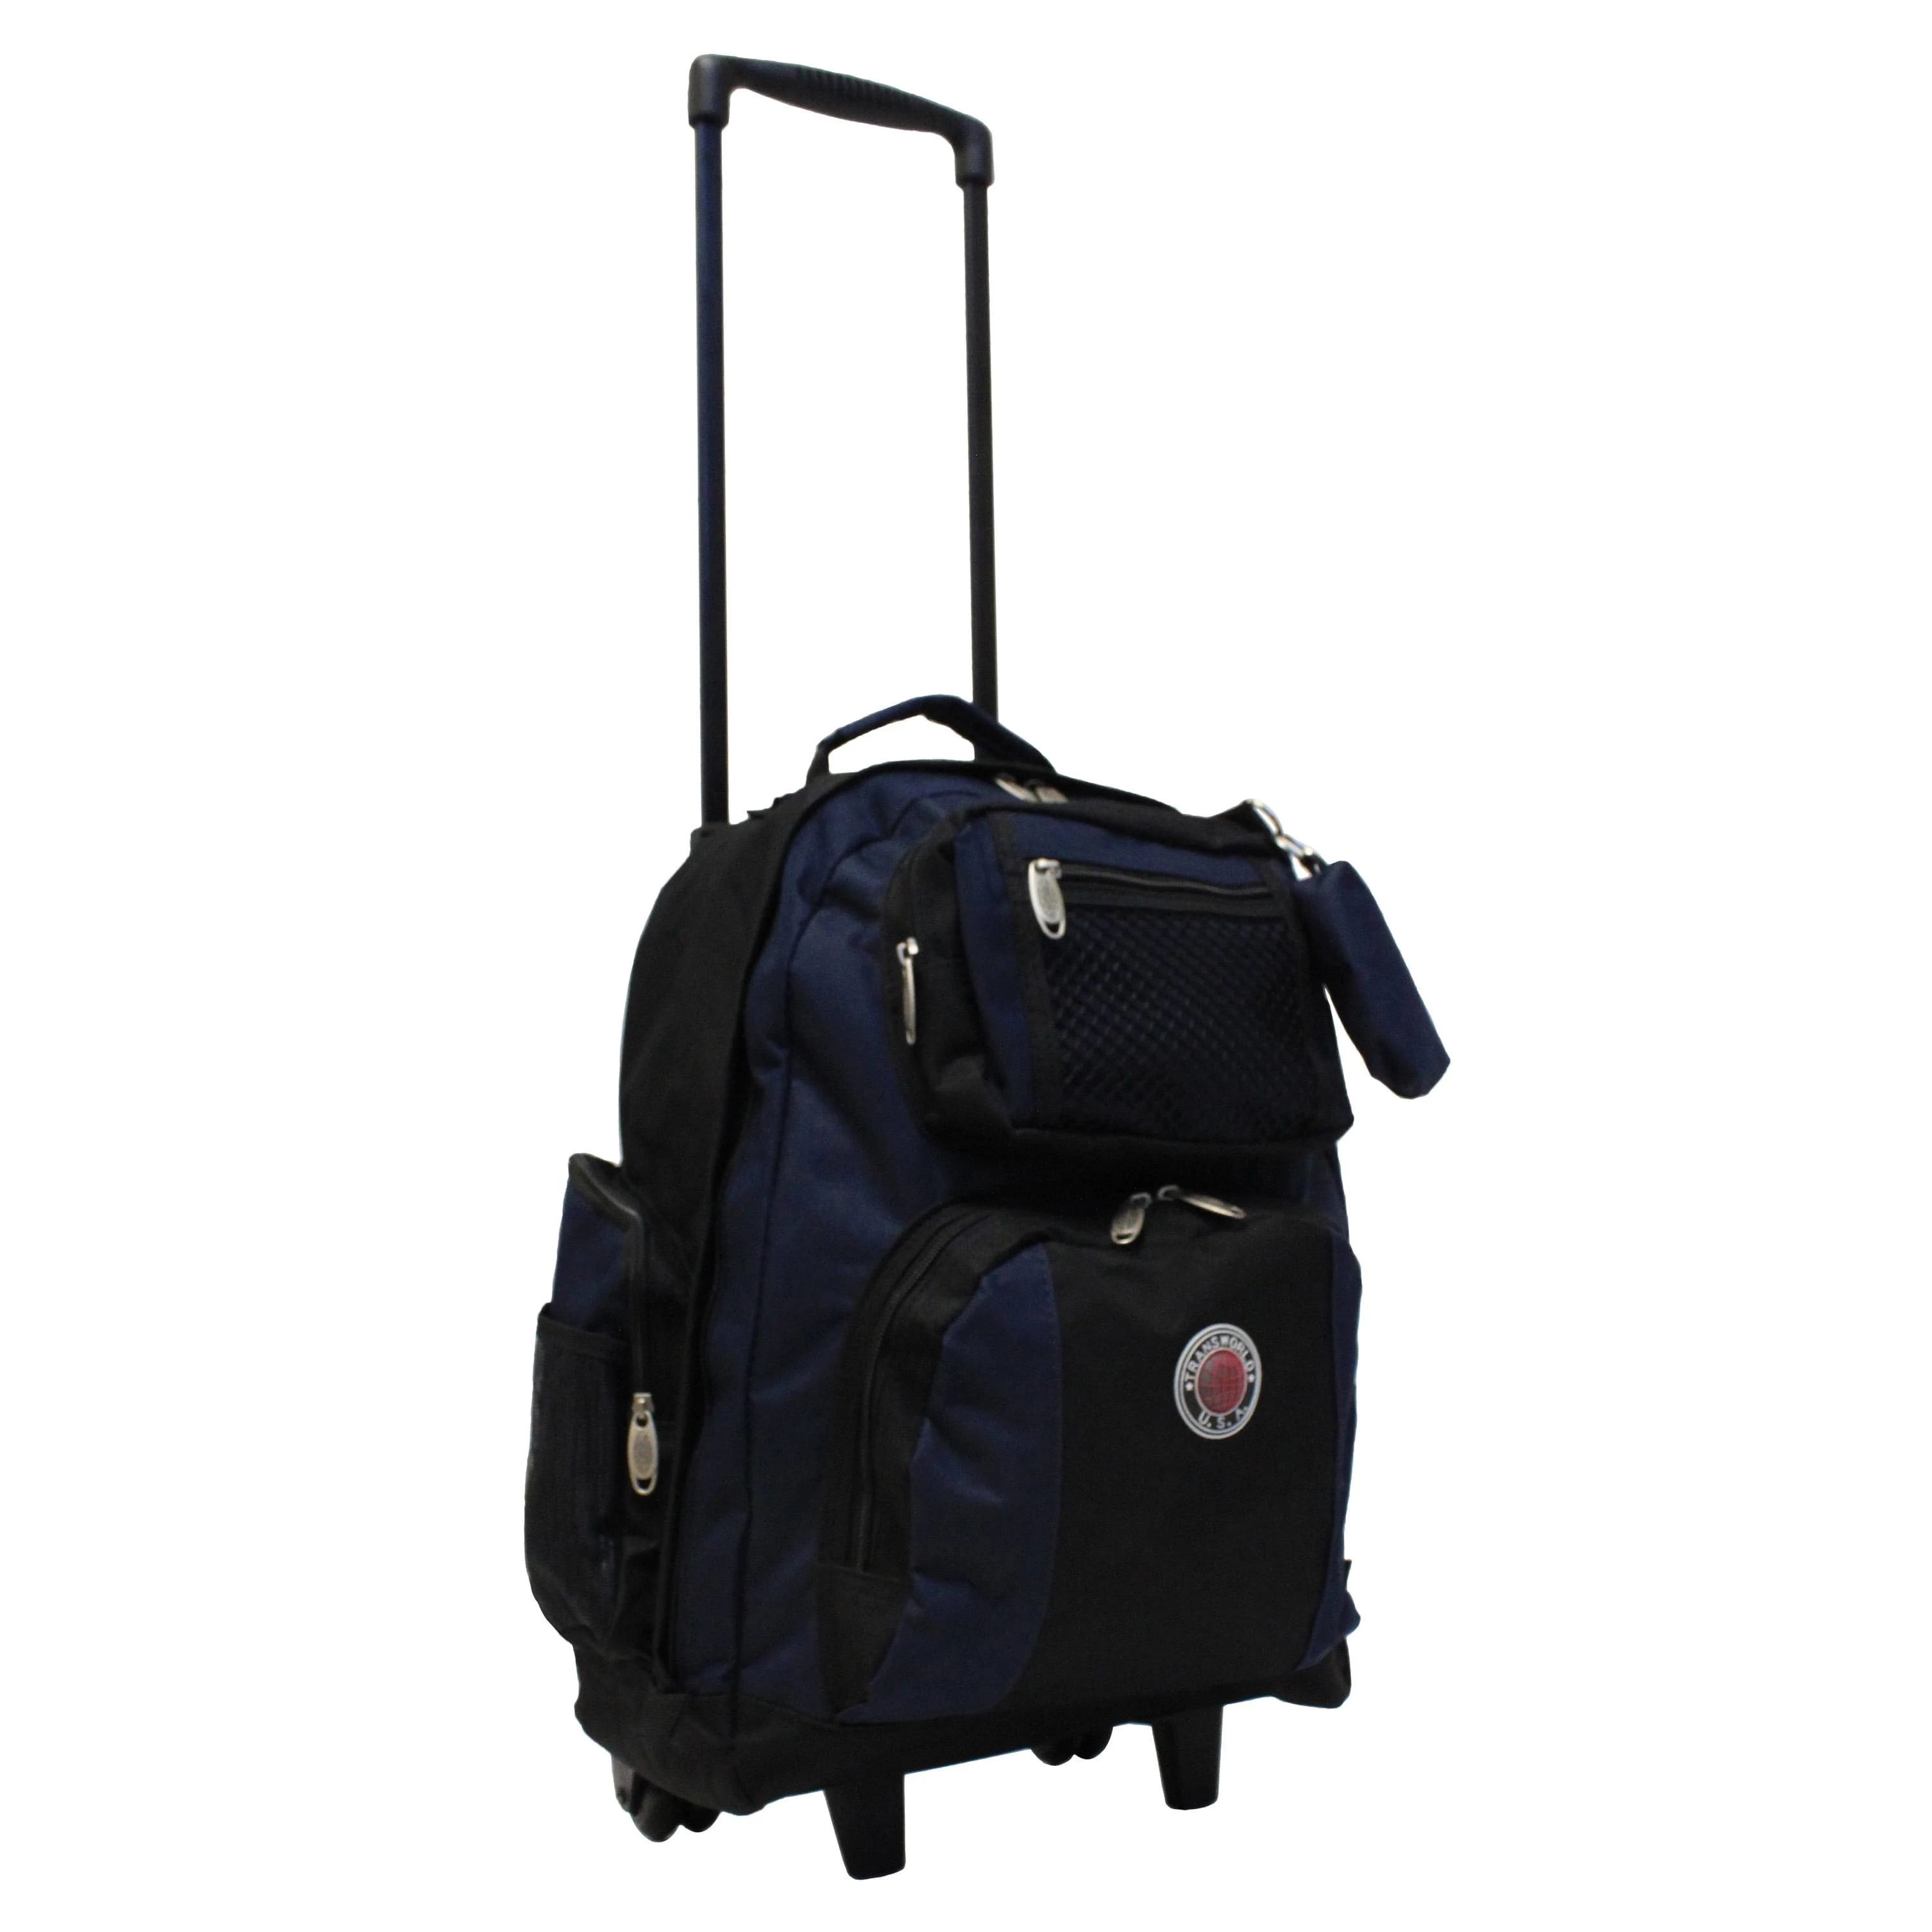 Rolling Black-Blue Backpack for Easy Travel | Image